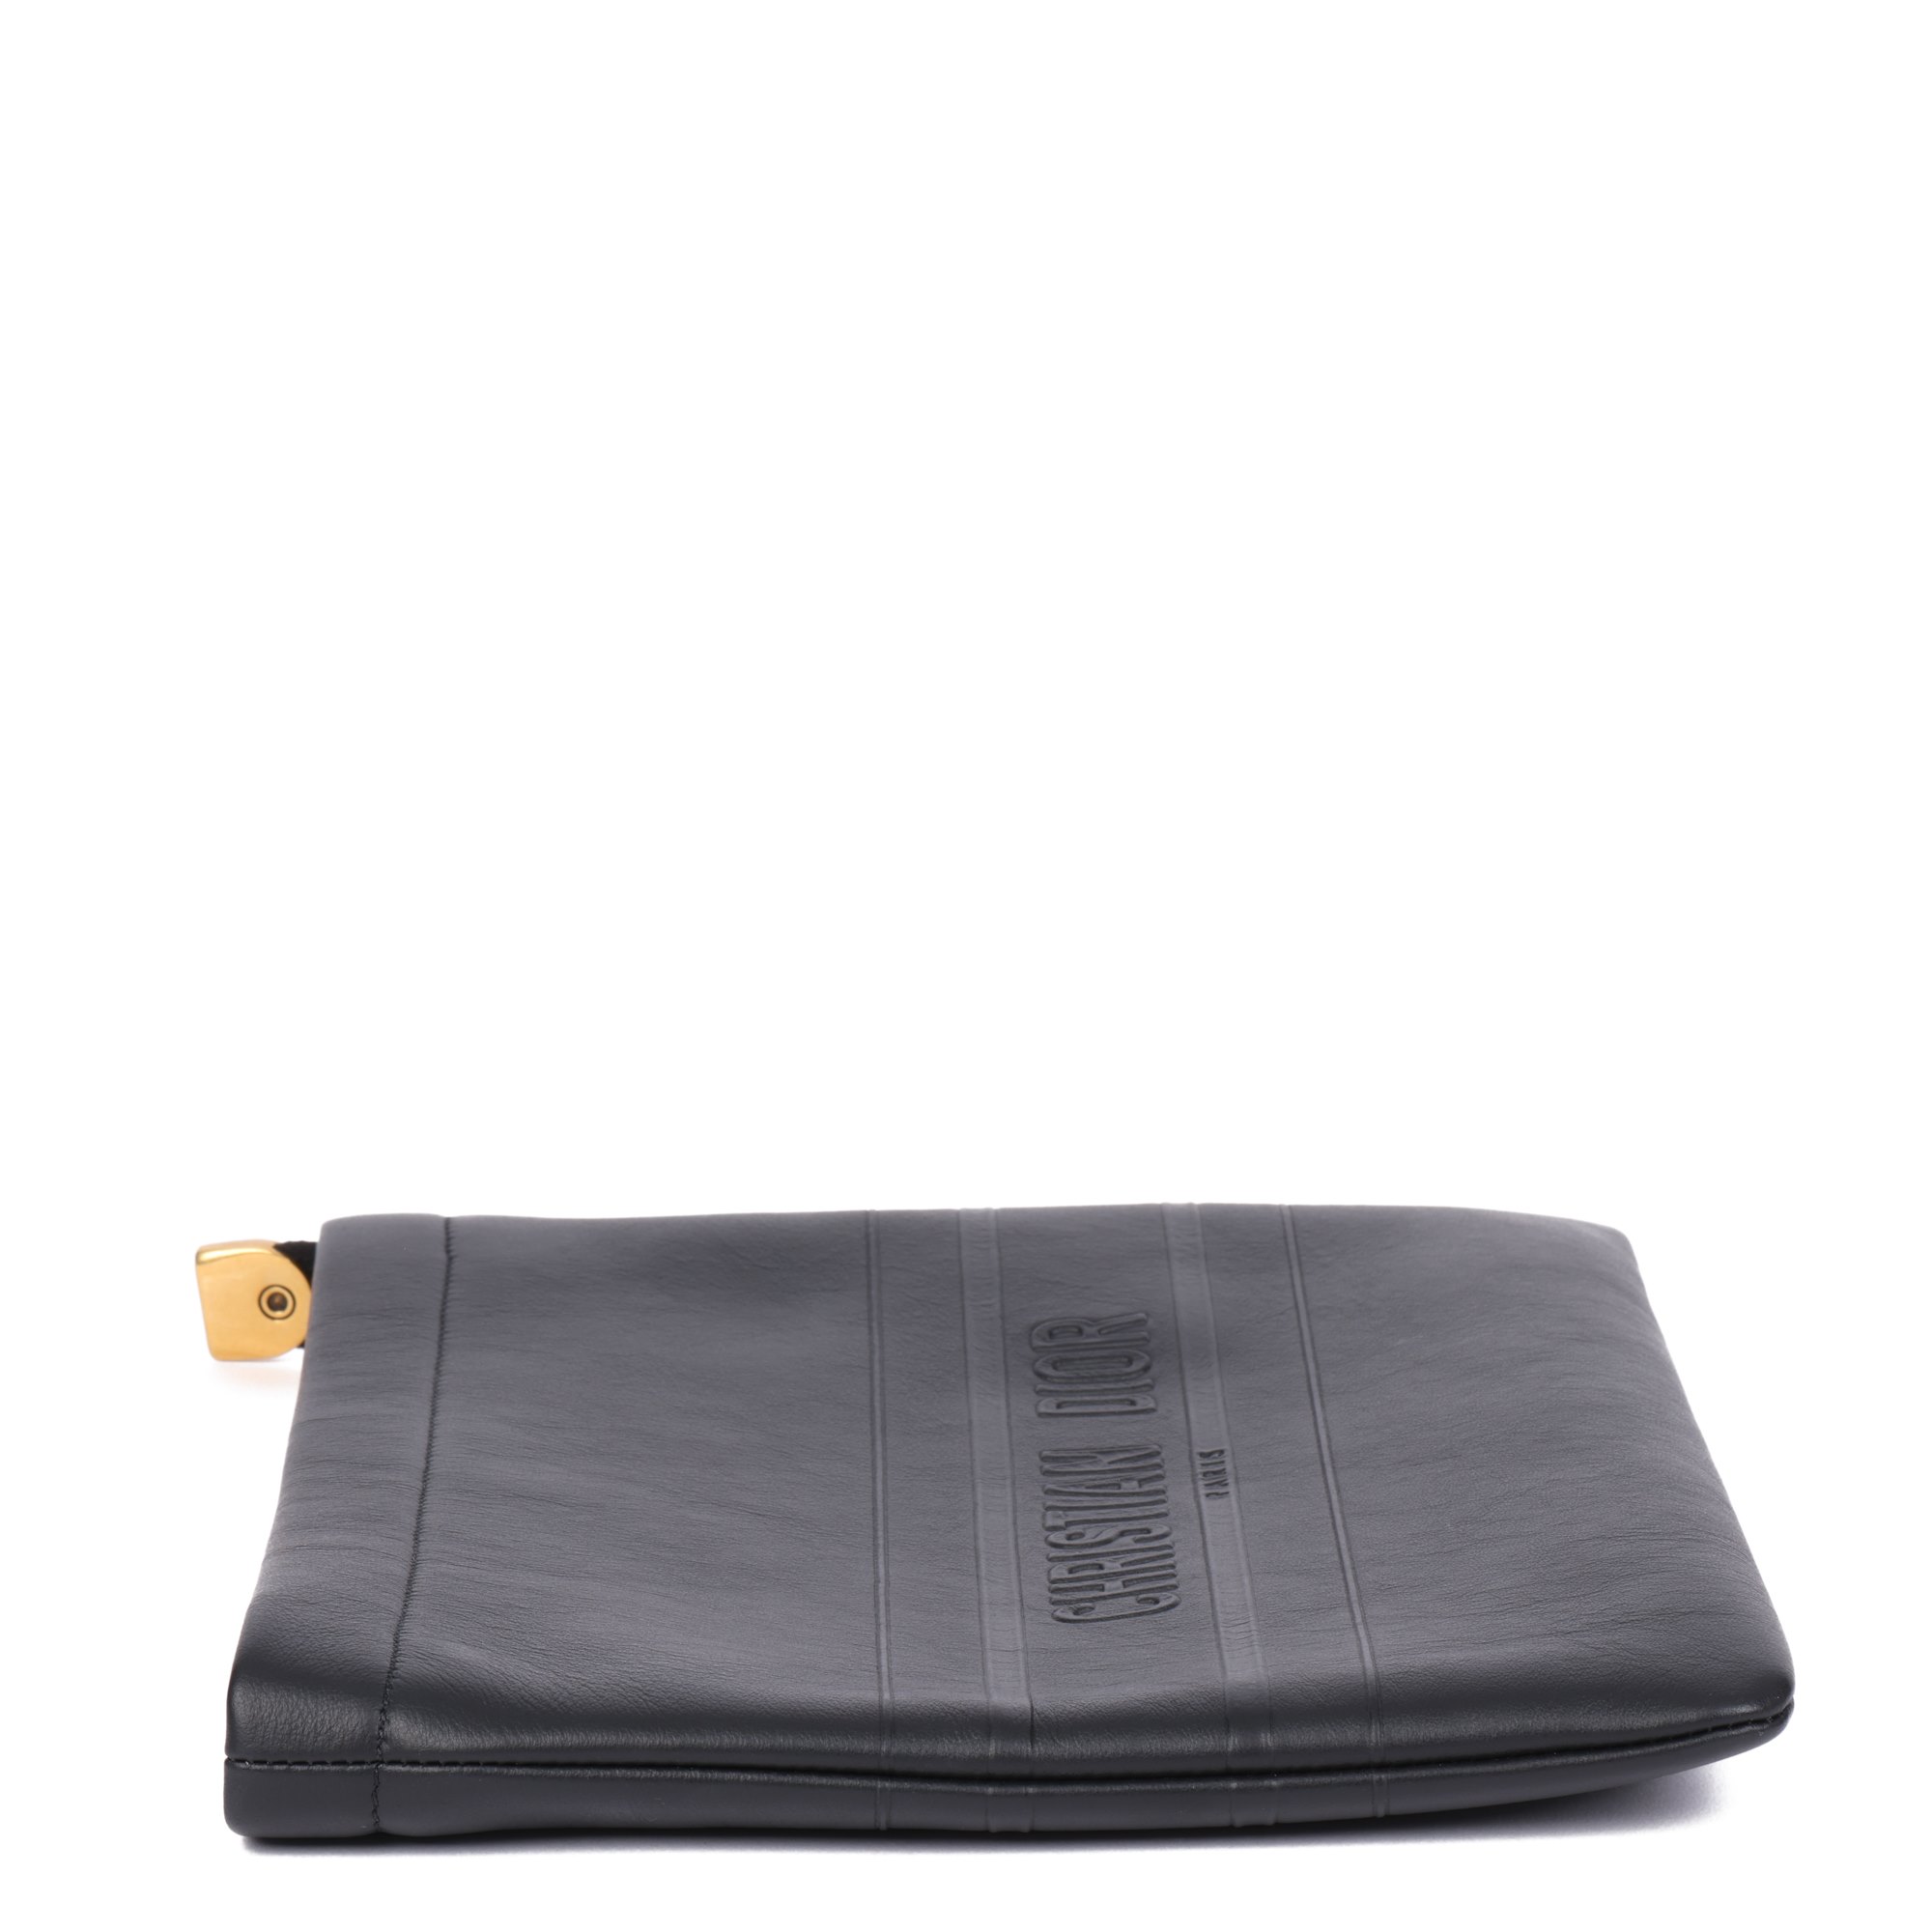 Christian Dior Black Calfskin Leather Clutch